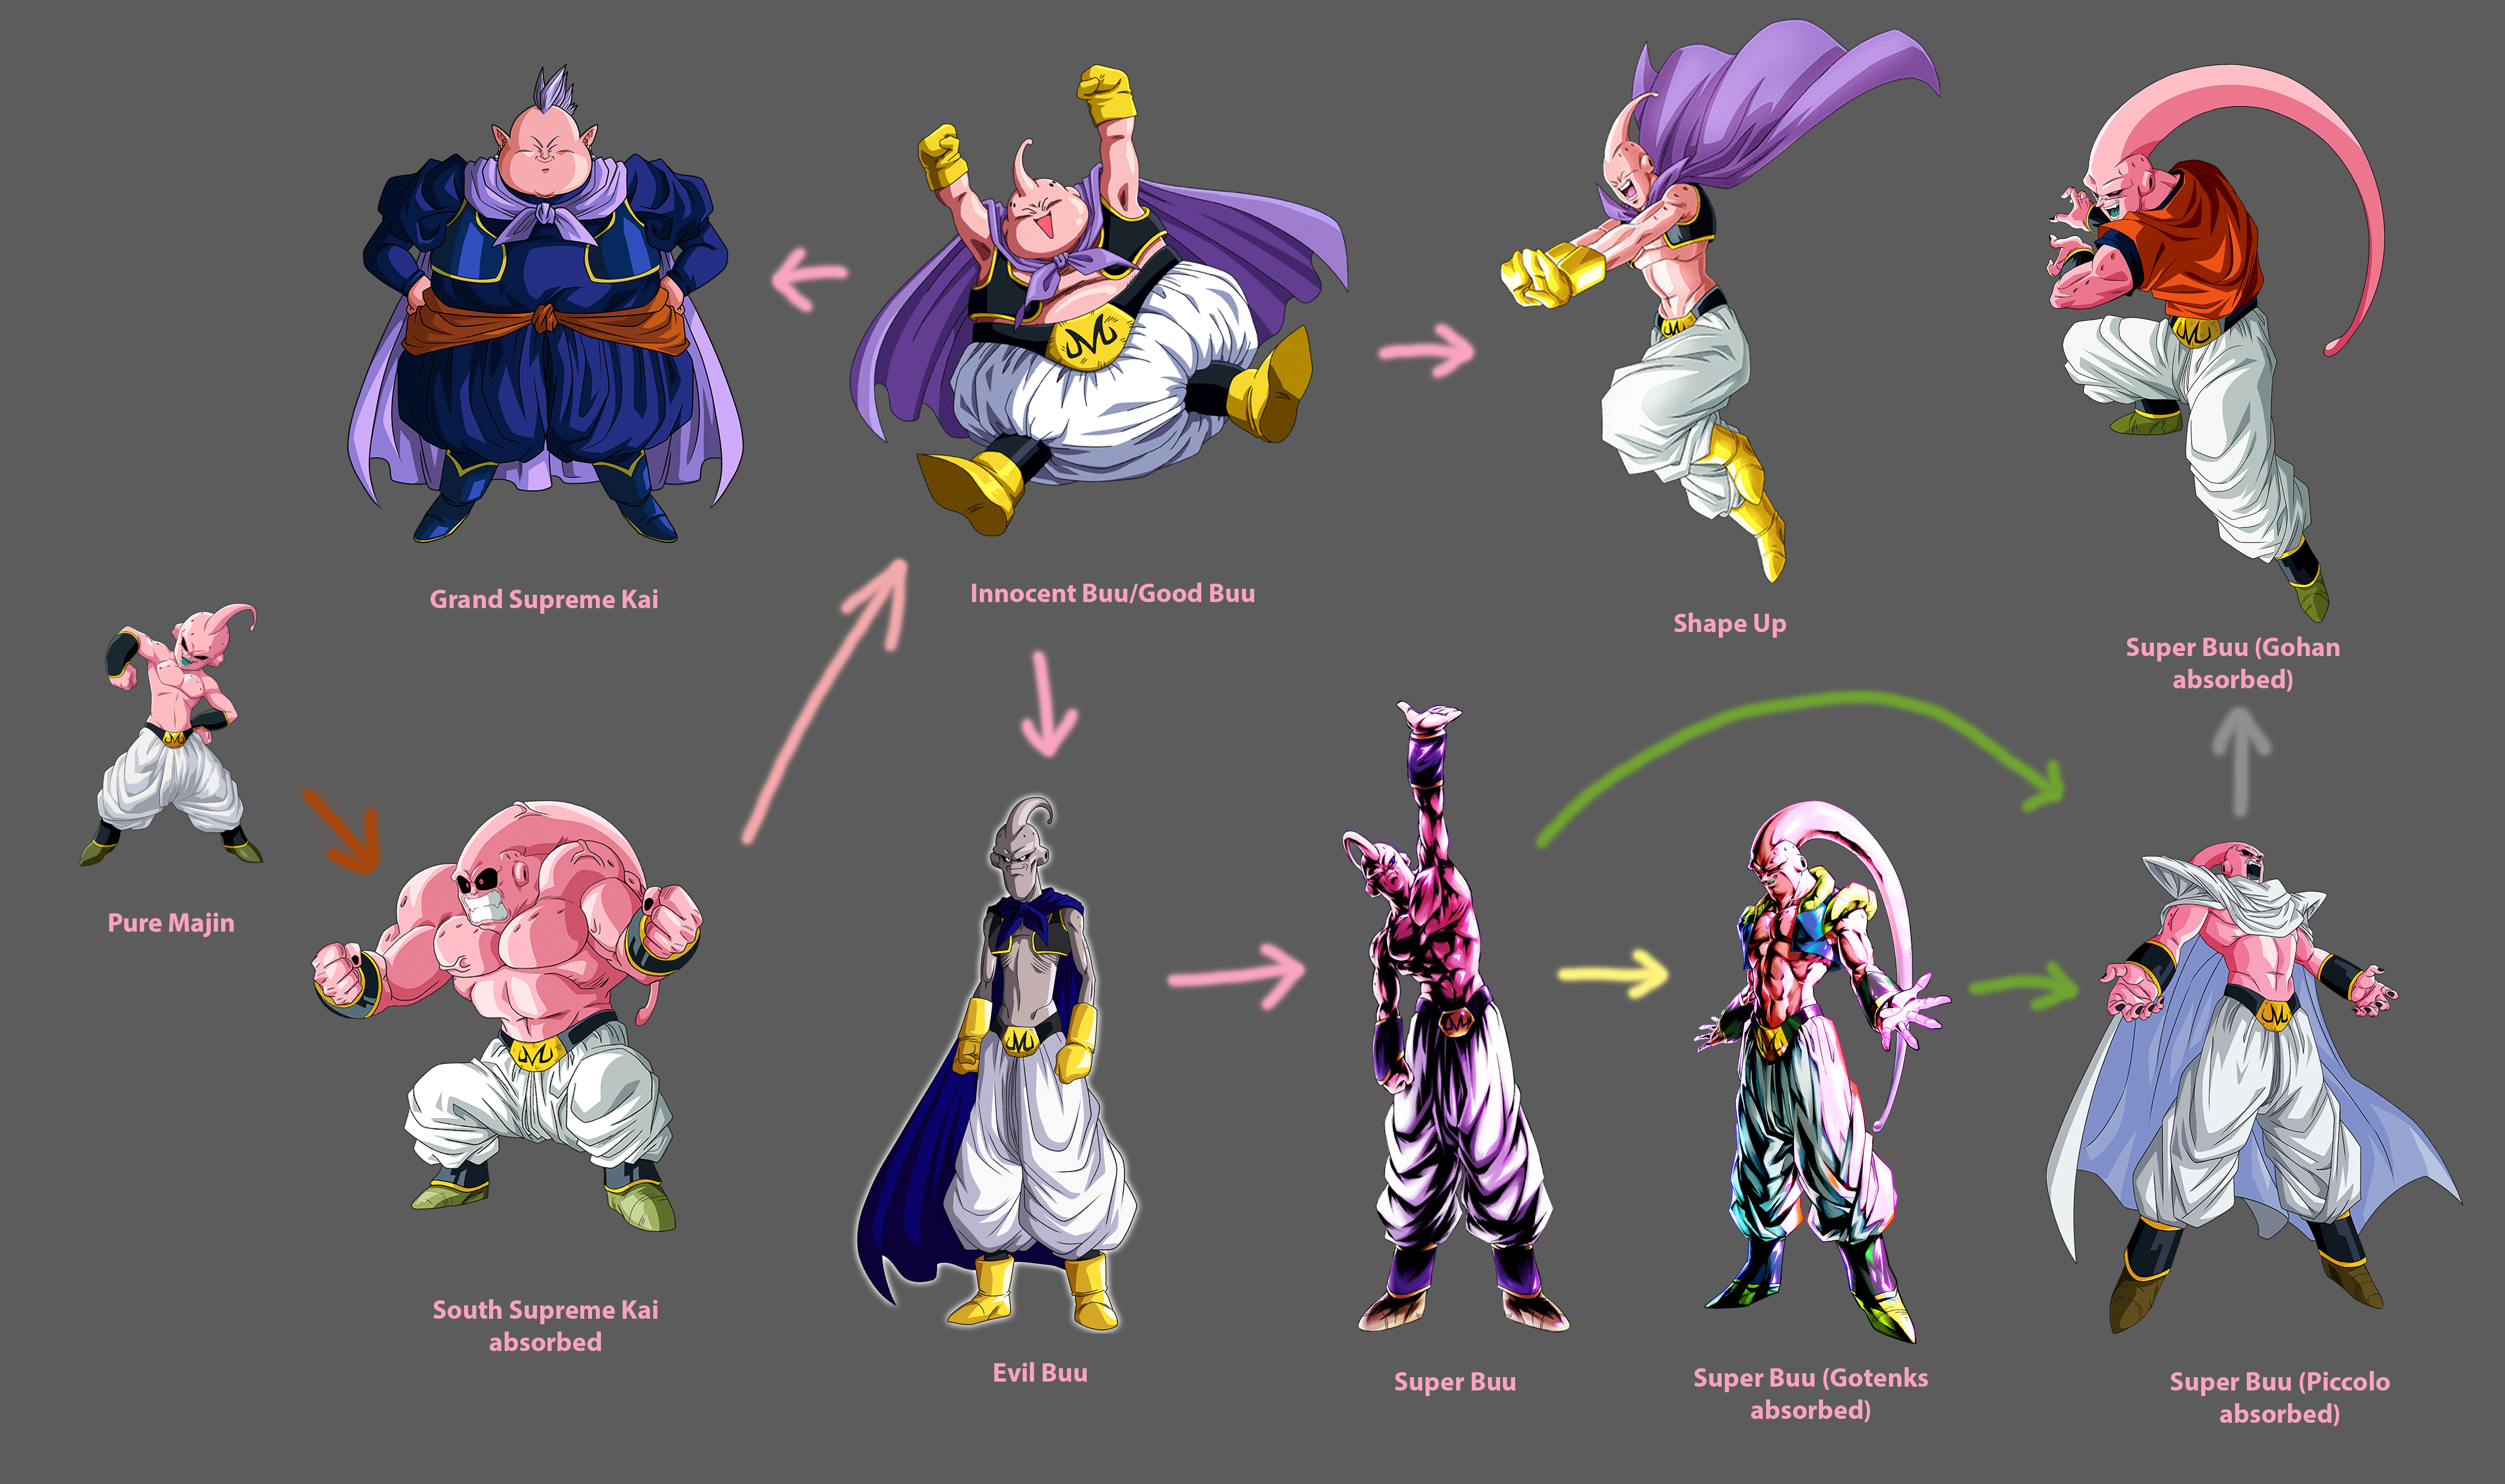 Shenron Majin Buu Dragon Ball GT: Transformation Trunks Piccolo, goku,  dragon, cartoon png